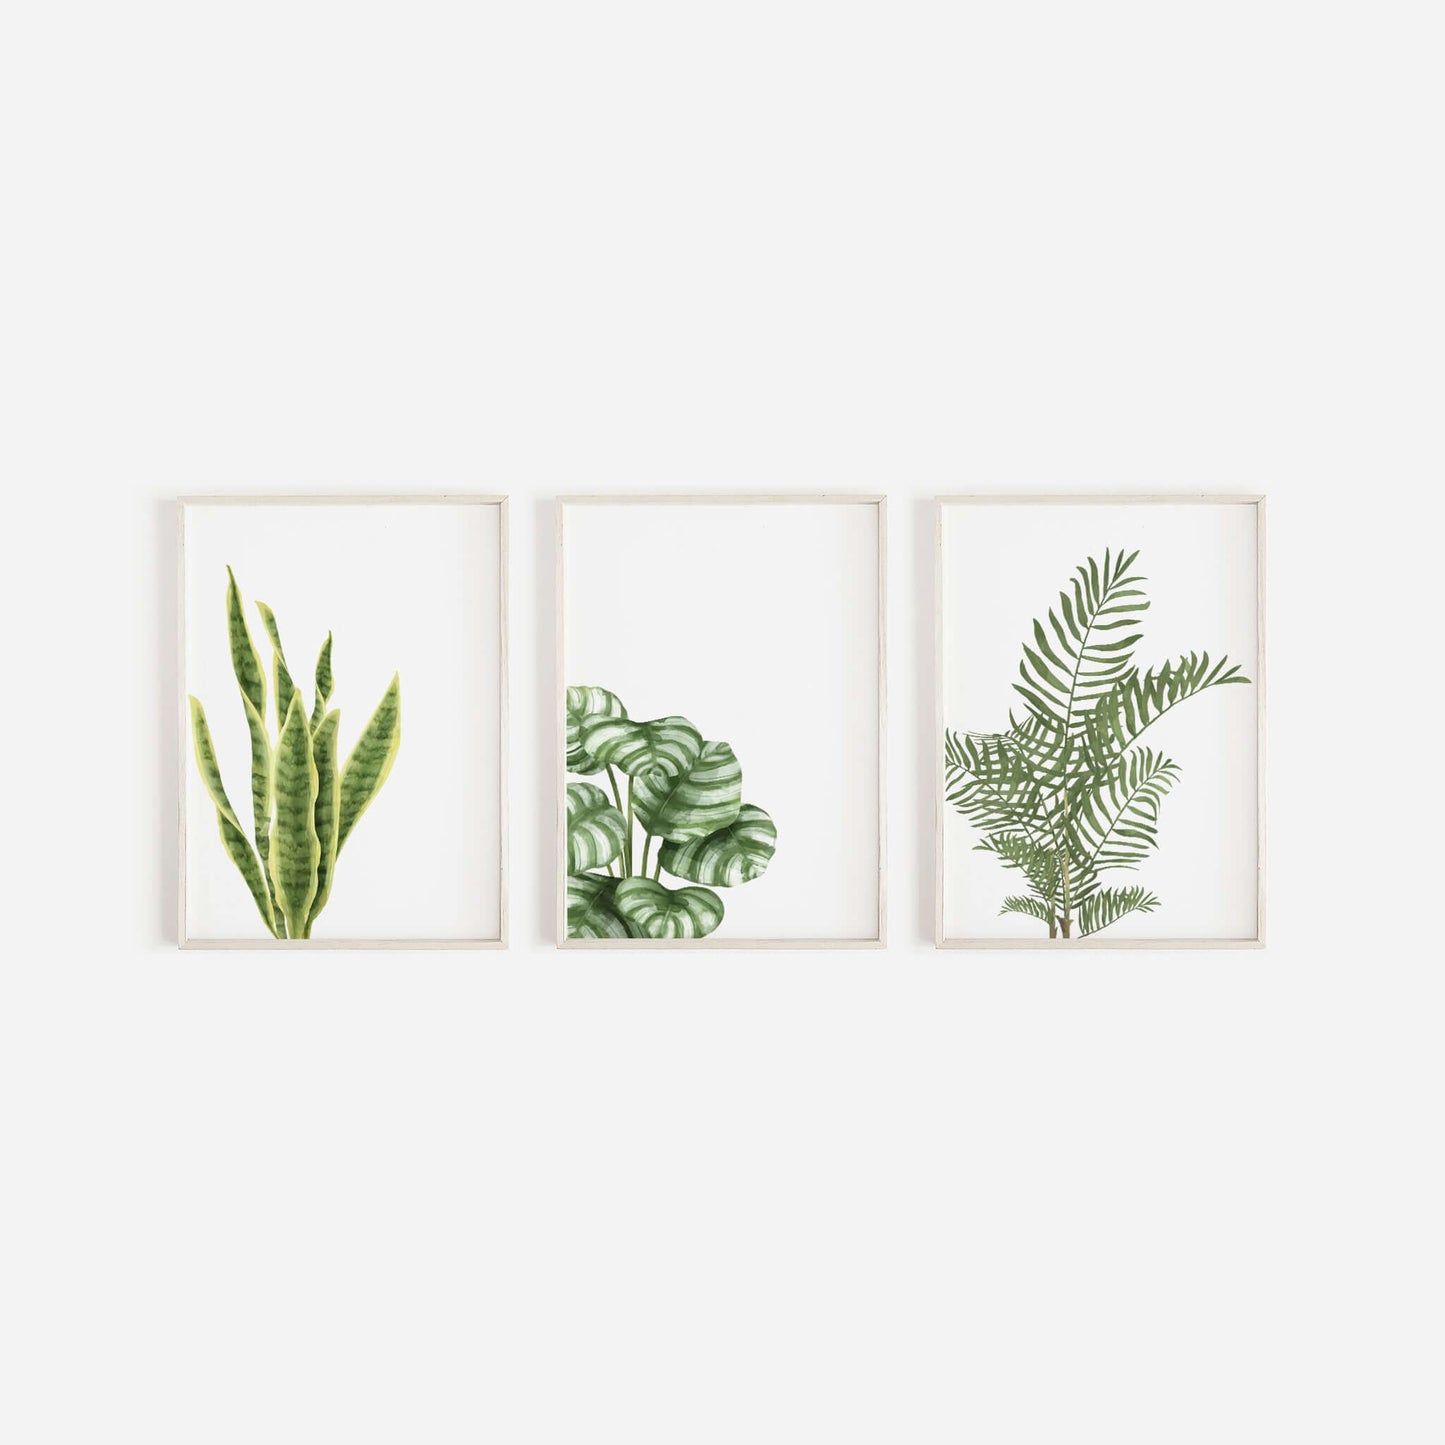 Set Of 3 Hand Drawn Botanical Prints, Wall Art, Home Decor, Bathroom Decor, Botanical Illustration, Leaf Prints, Bathroom Prints,Home Prints - The Gift Studio